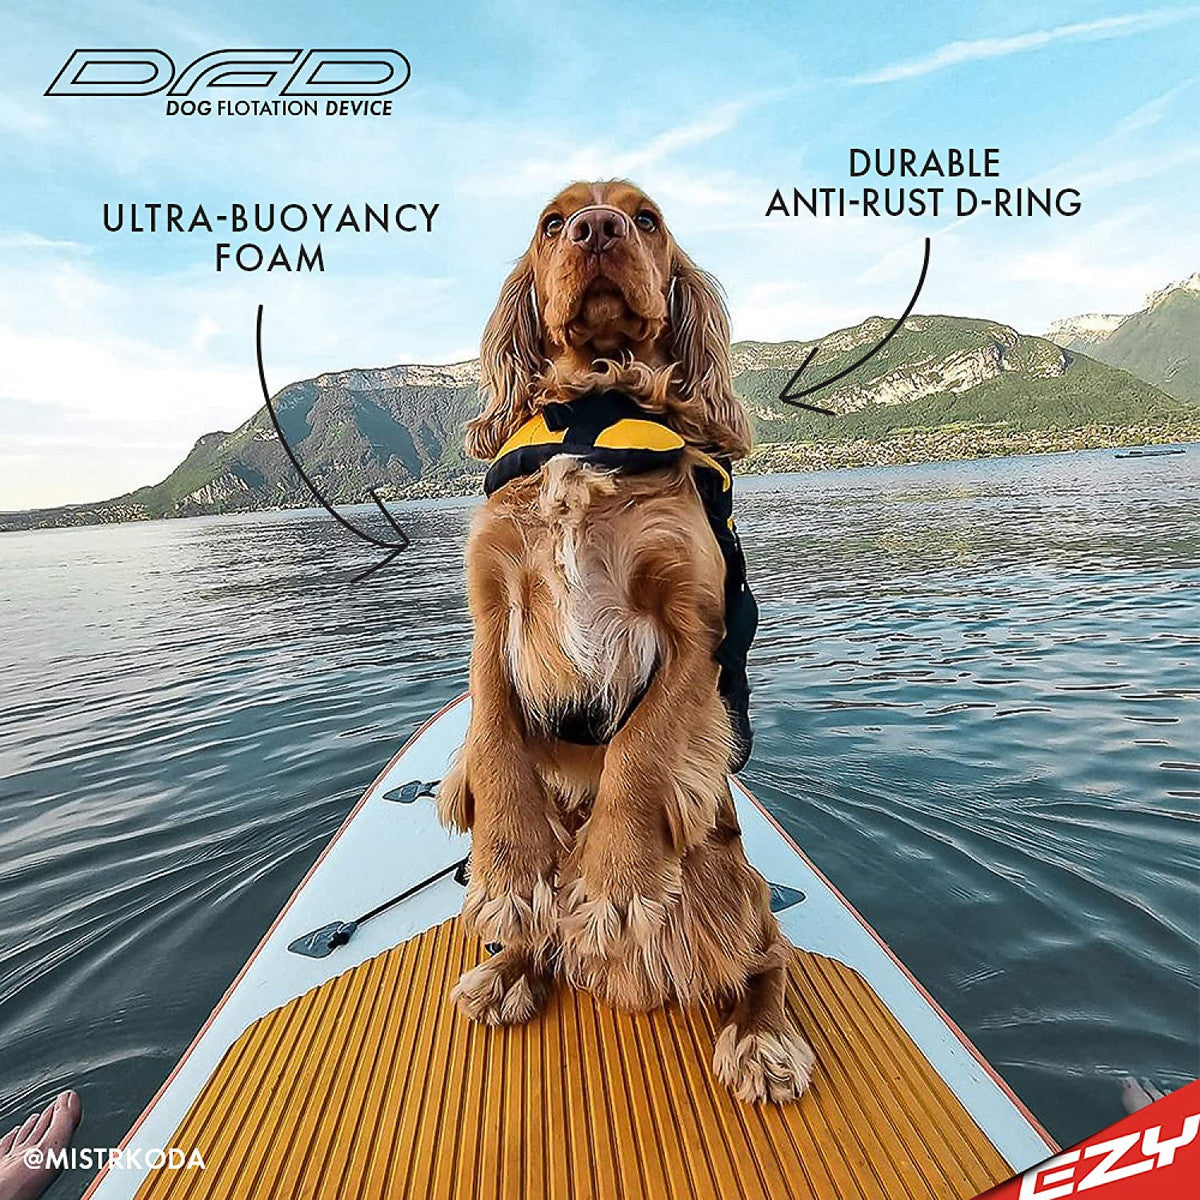 EzyDog Dog Flotation Device